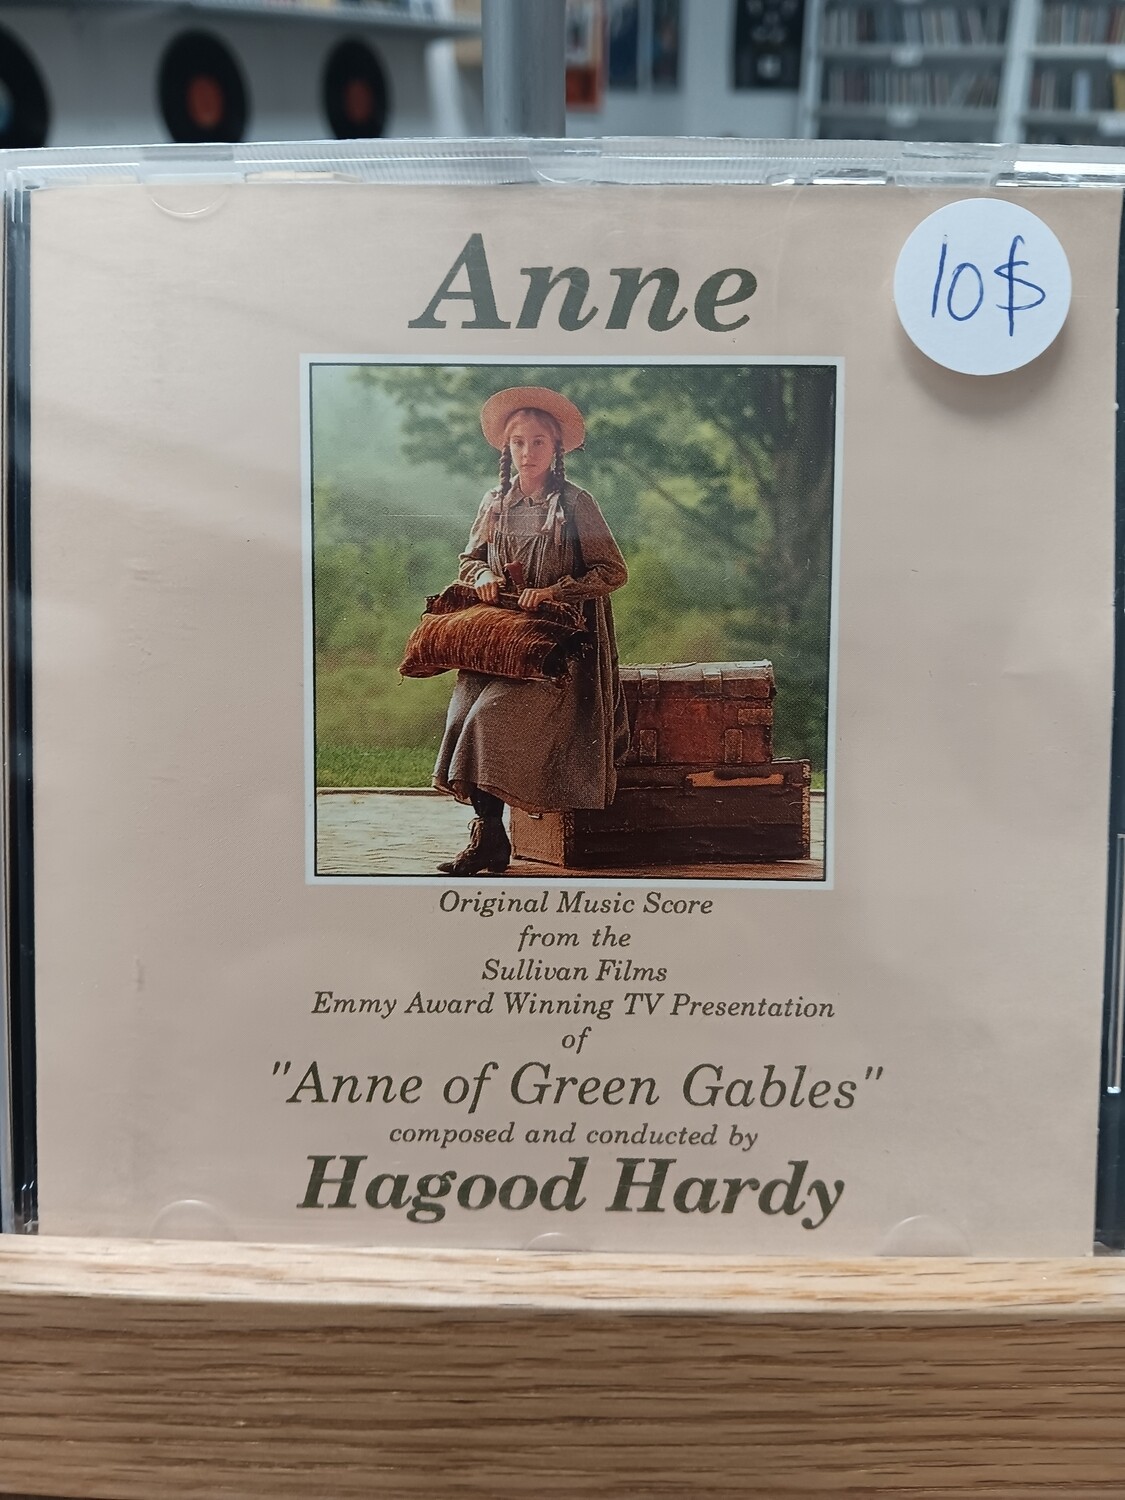 VARIOUS - Anne of green gables (CD)